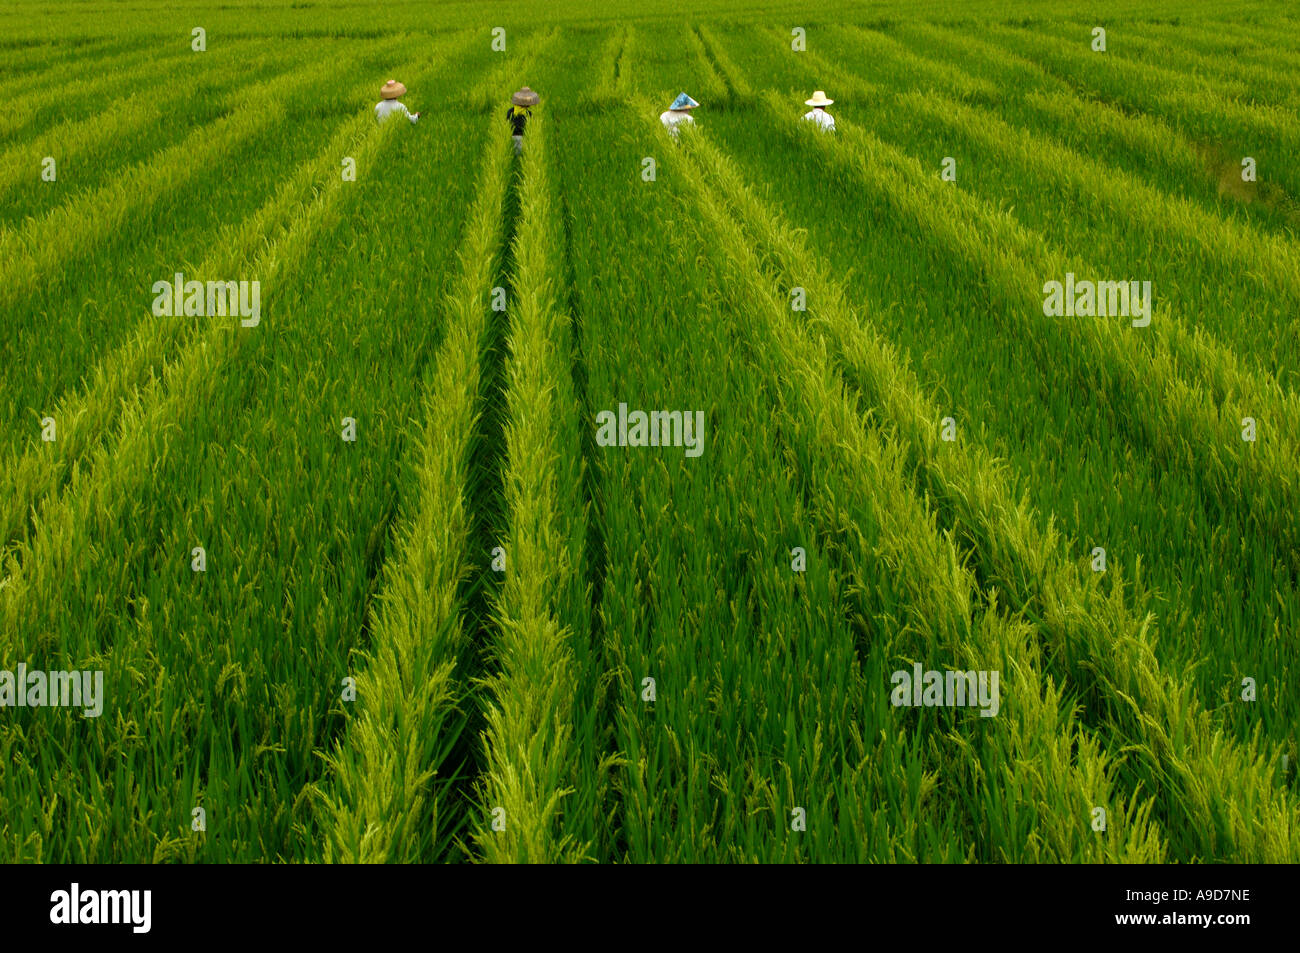 Chinese farmers work in the rice fields in Sanya Hainan China 30 MAR 2006 Stock Photo